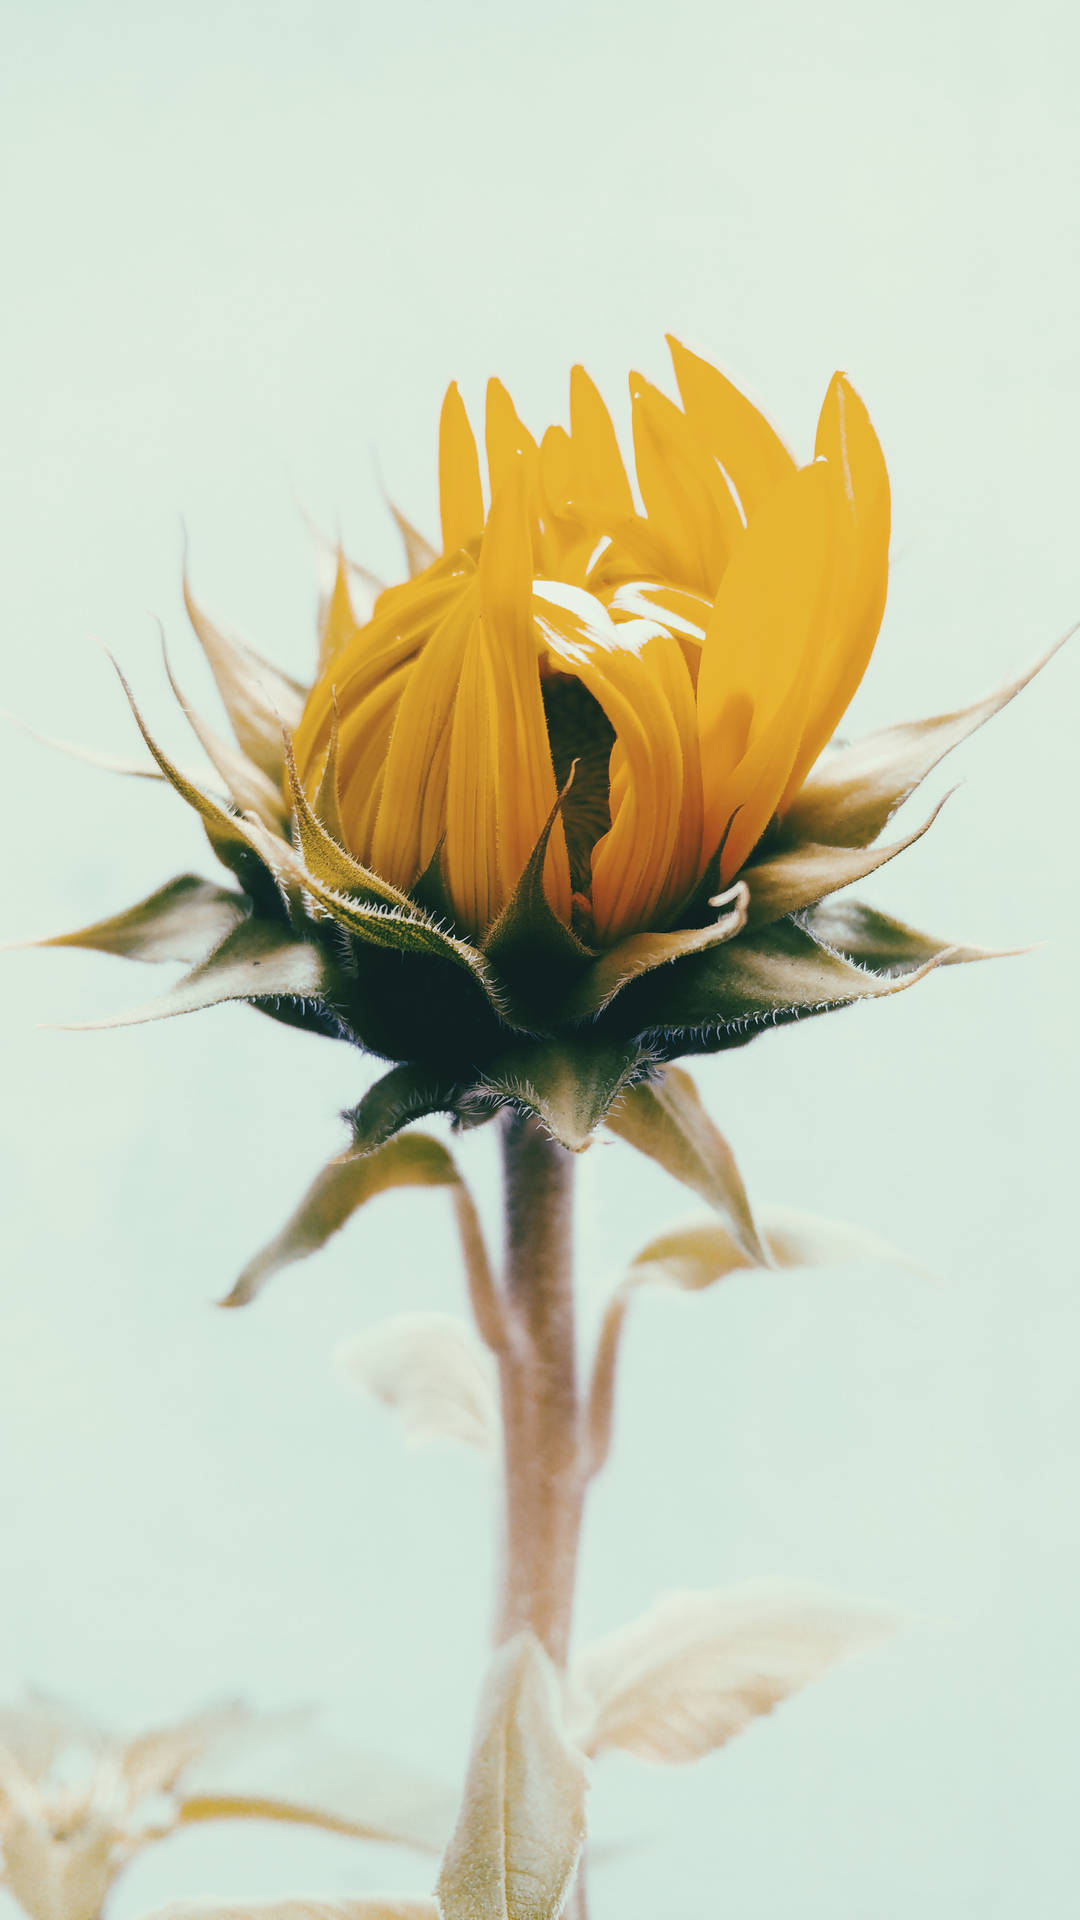 Sunflower Under The Bright Blue Sky Background